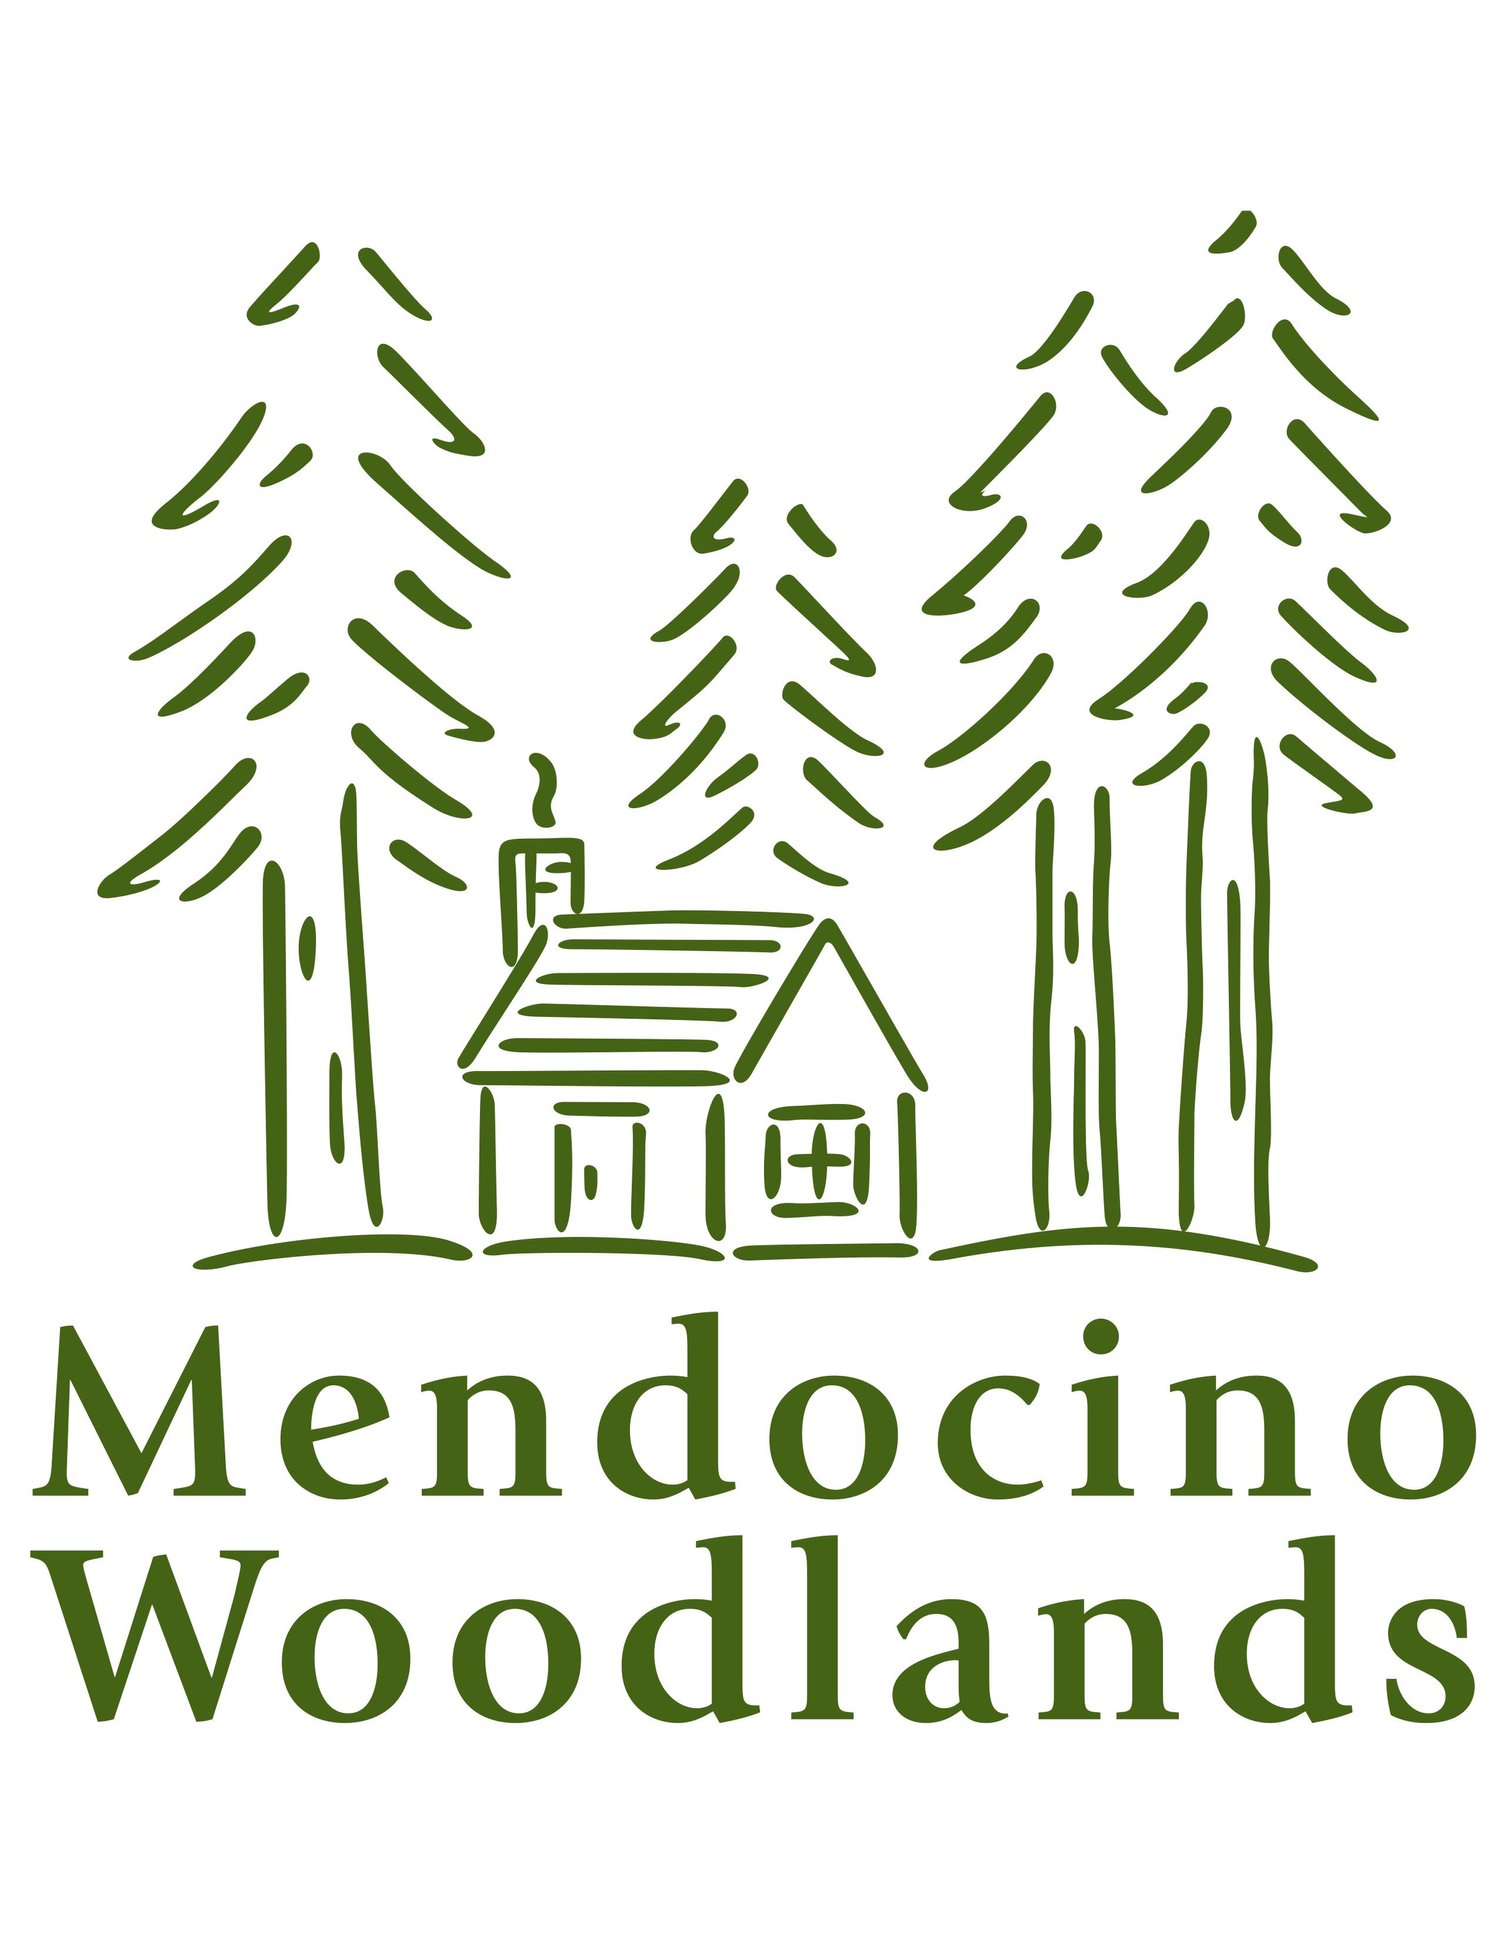 Mendocino Woodlands|Park|Travel